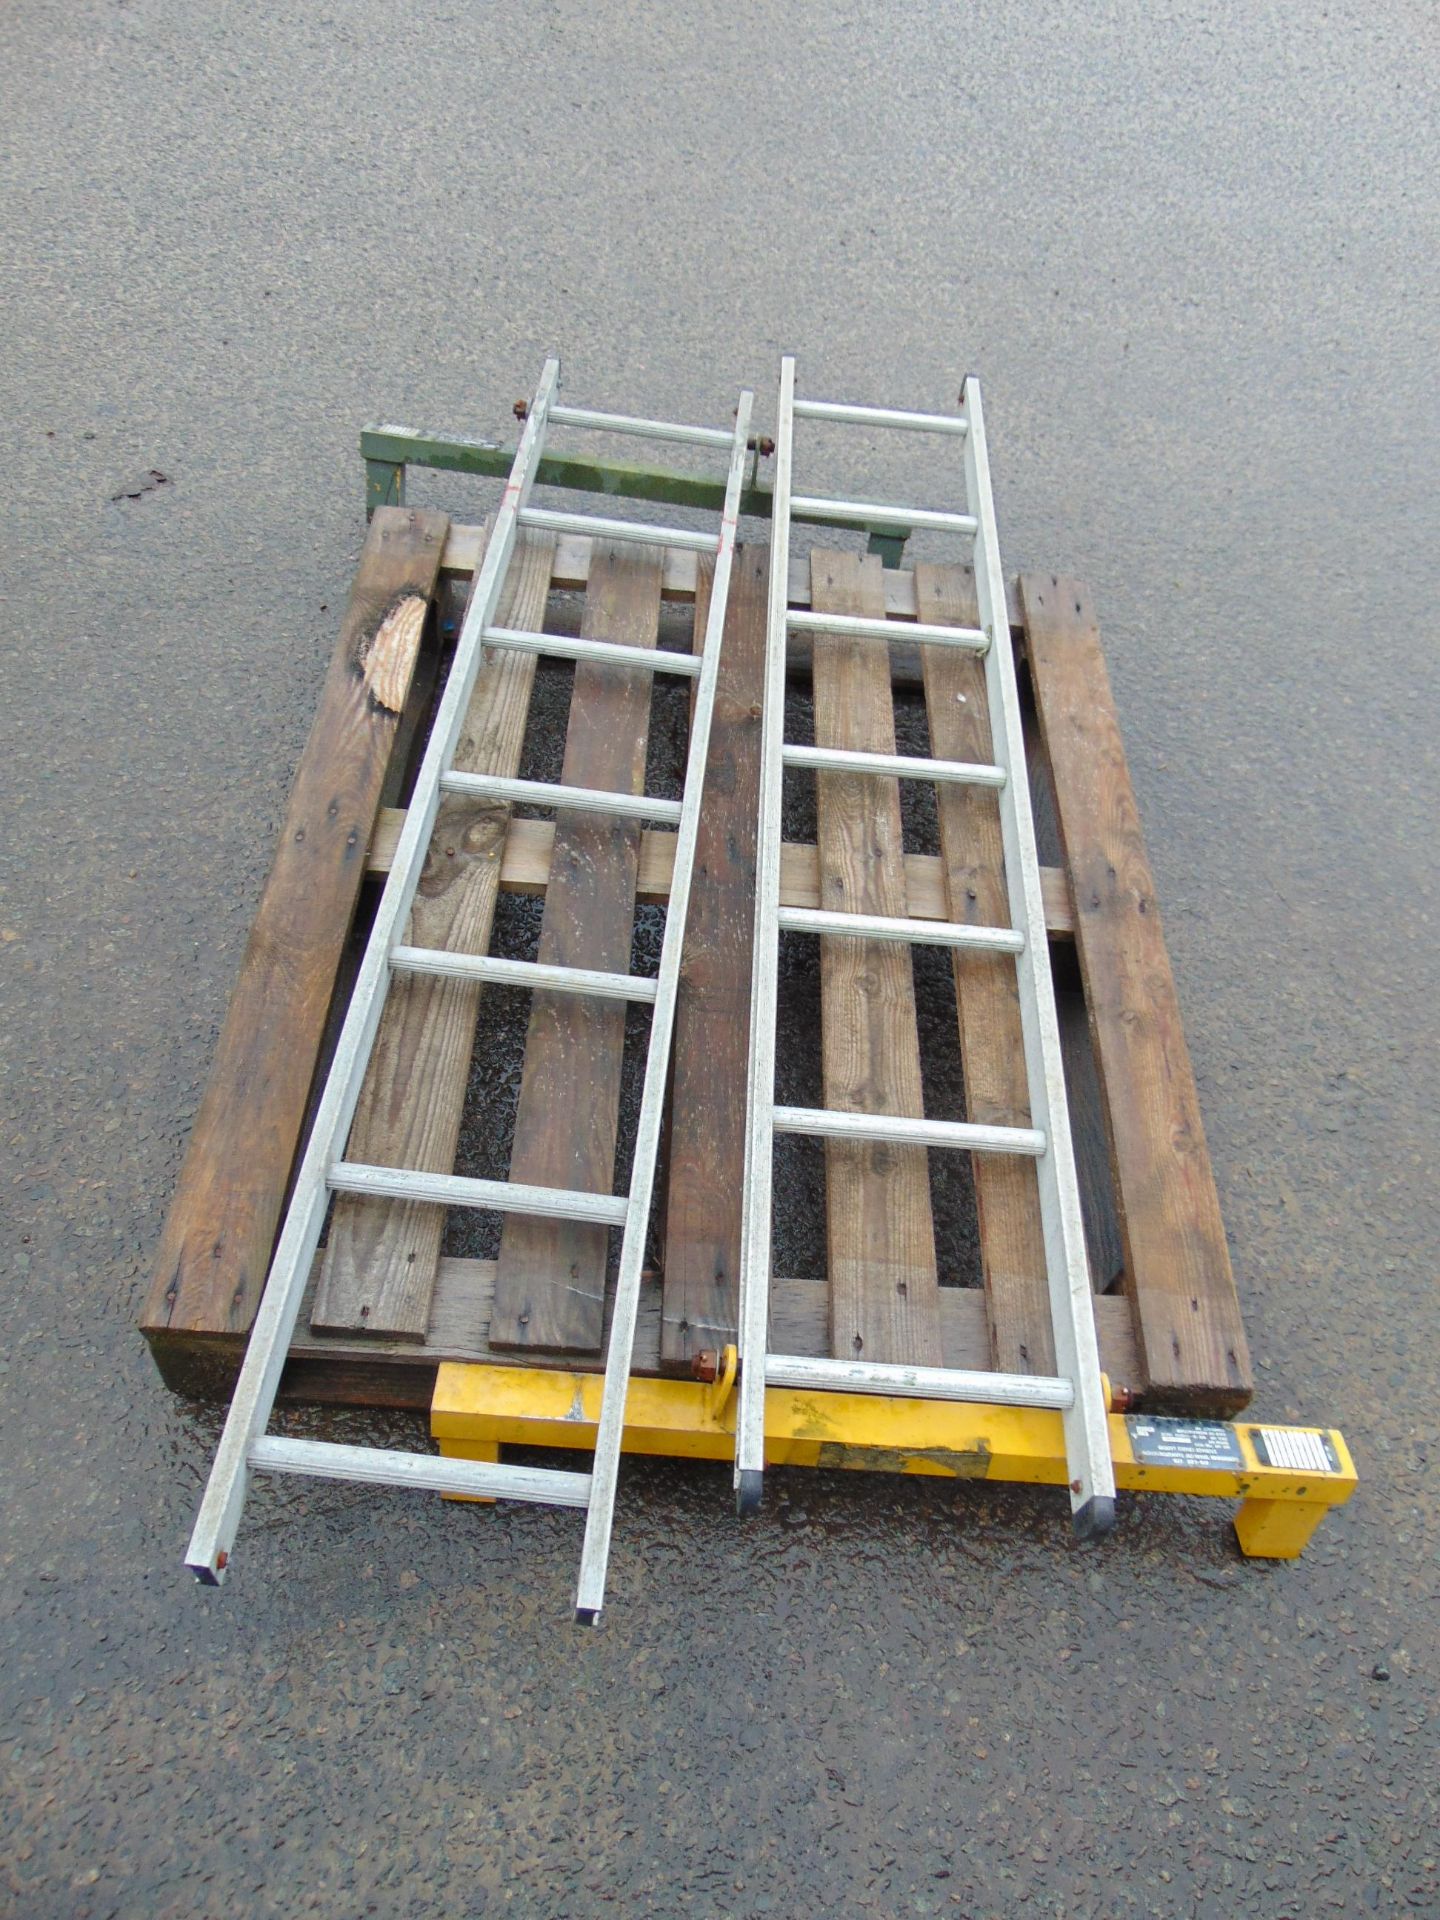 2 x Sidewinder/Sparrow Transportation/Storage Cradle Ladder - Image 2 of 4